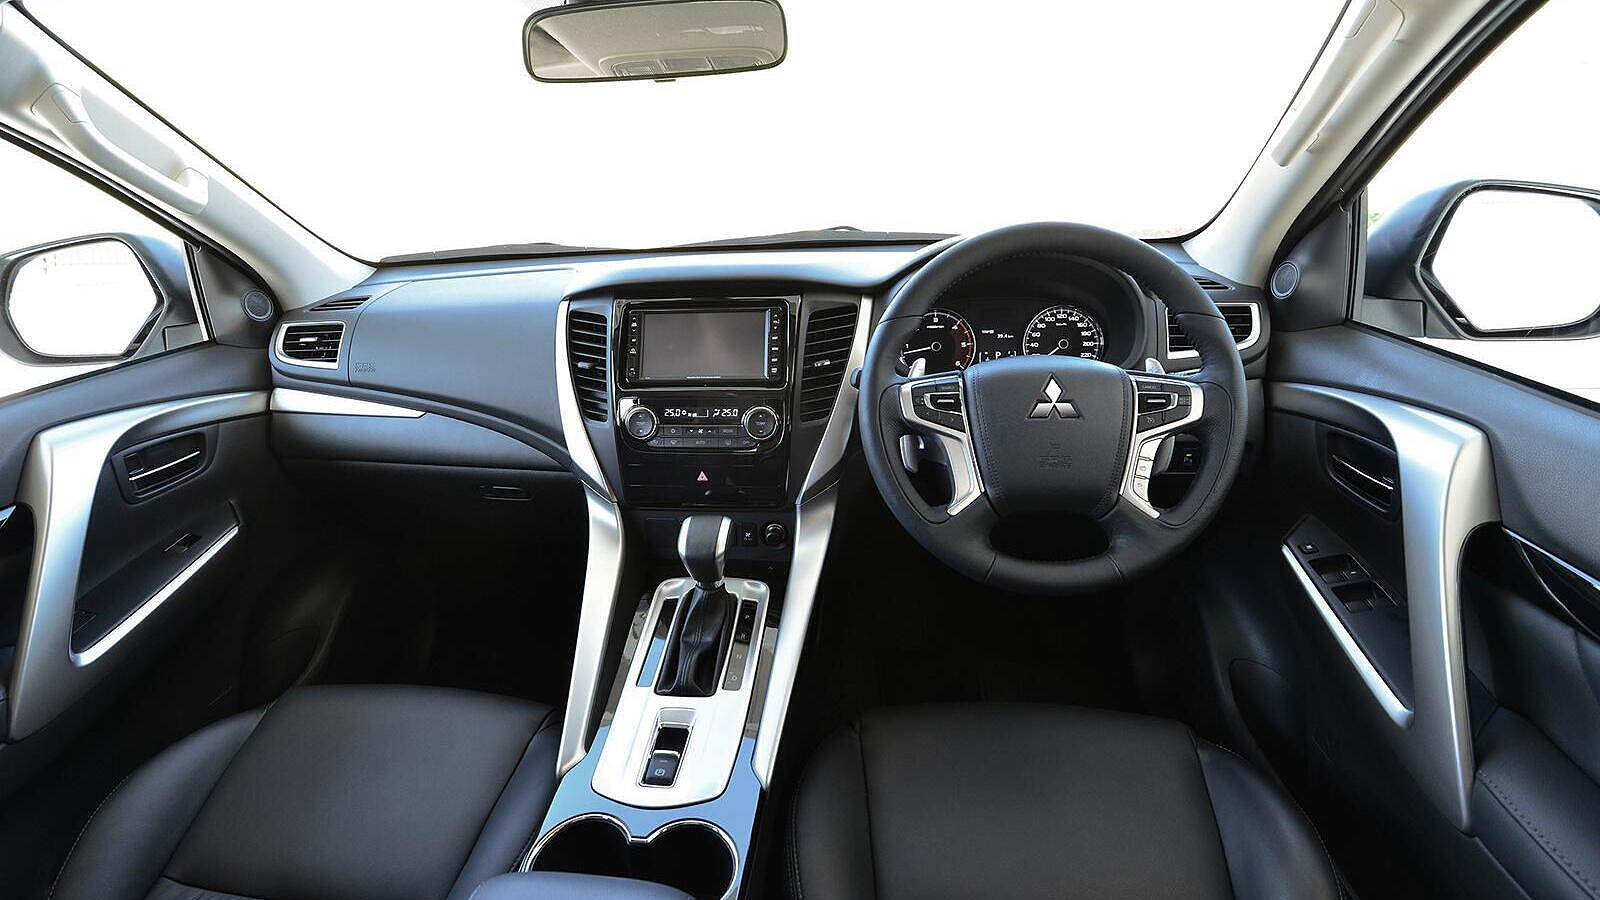 Mitsubishi Pajero Sport Images Interior Exterior Photo